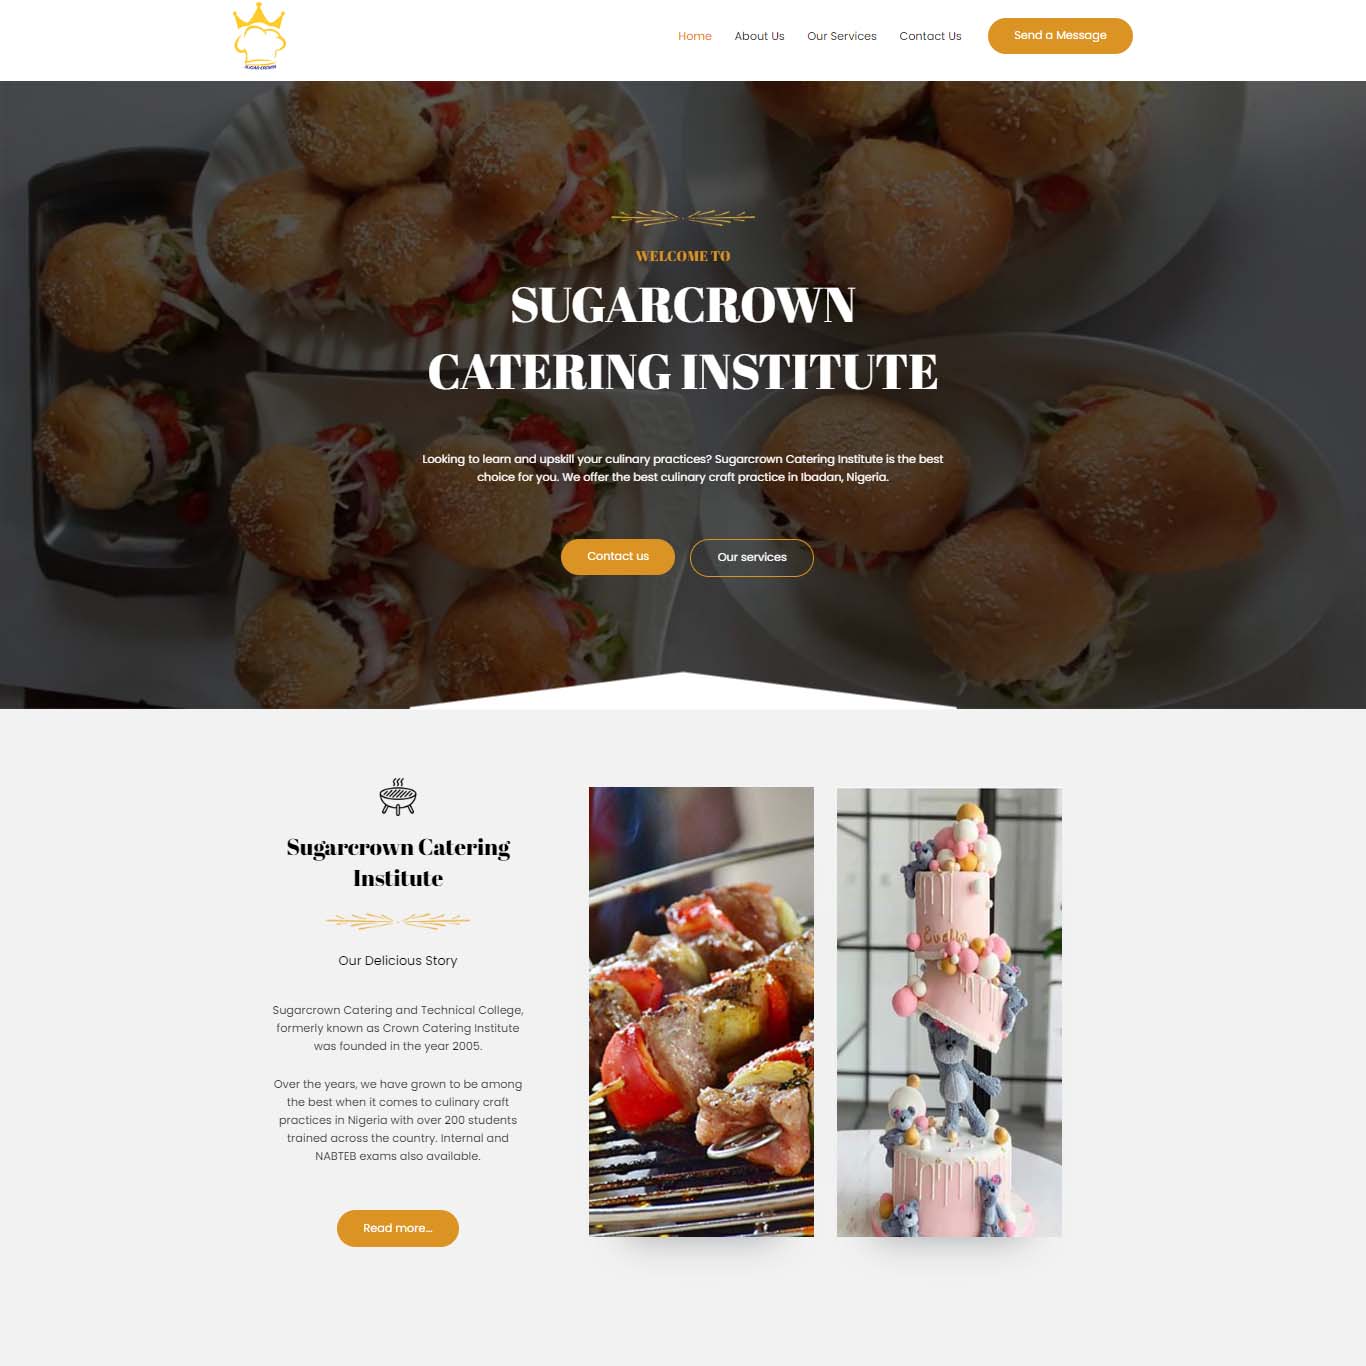 Built a Website for a Catering Institute in Nigeria